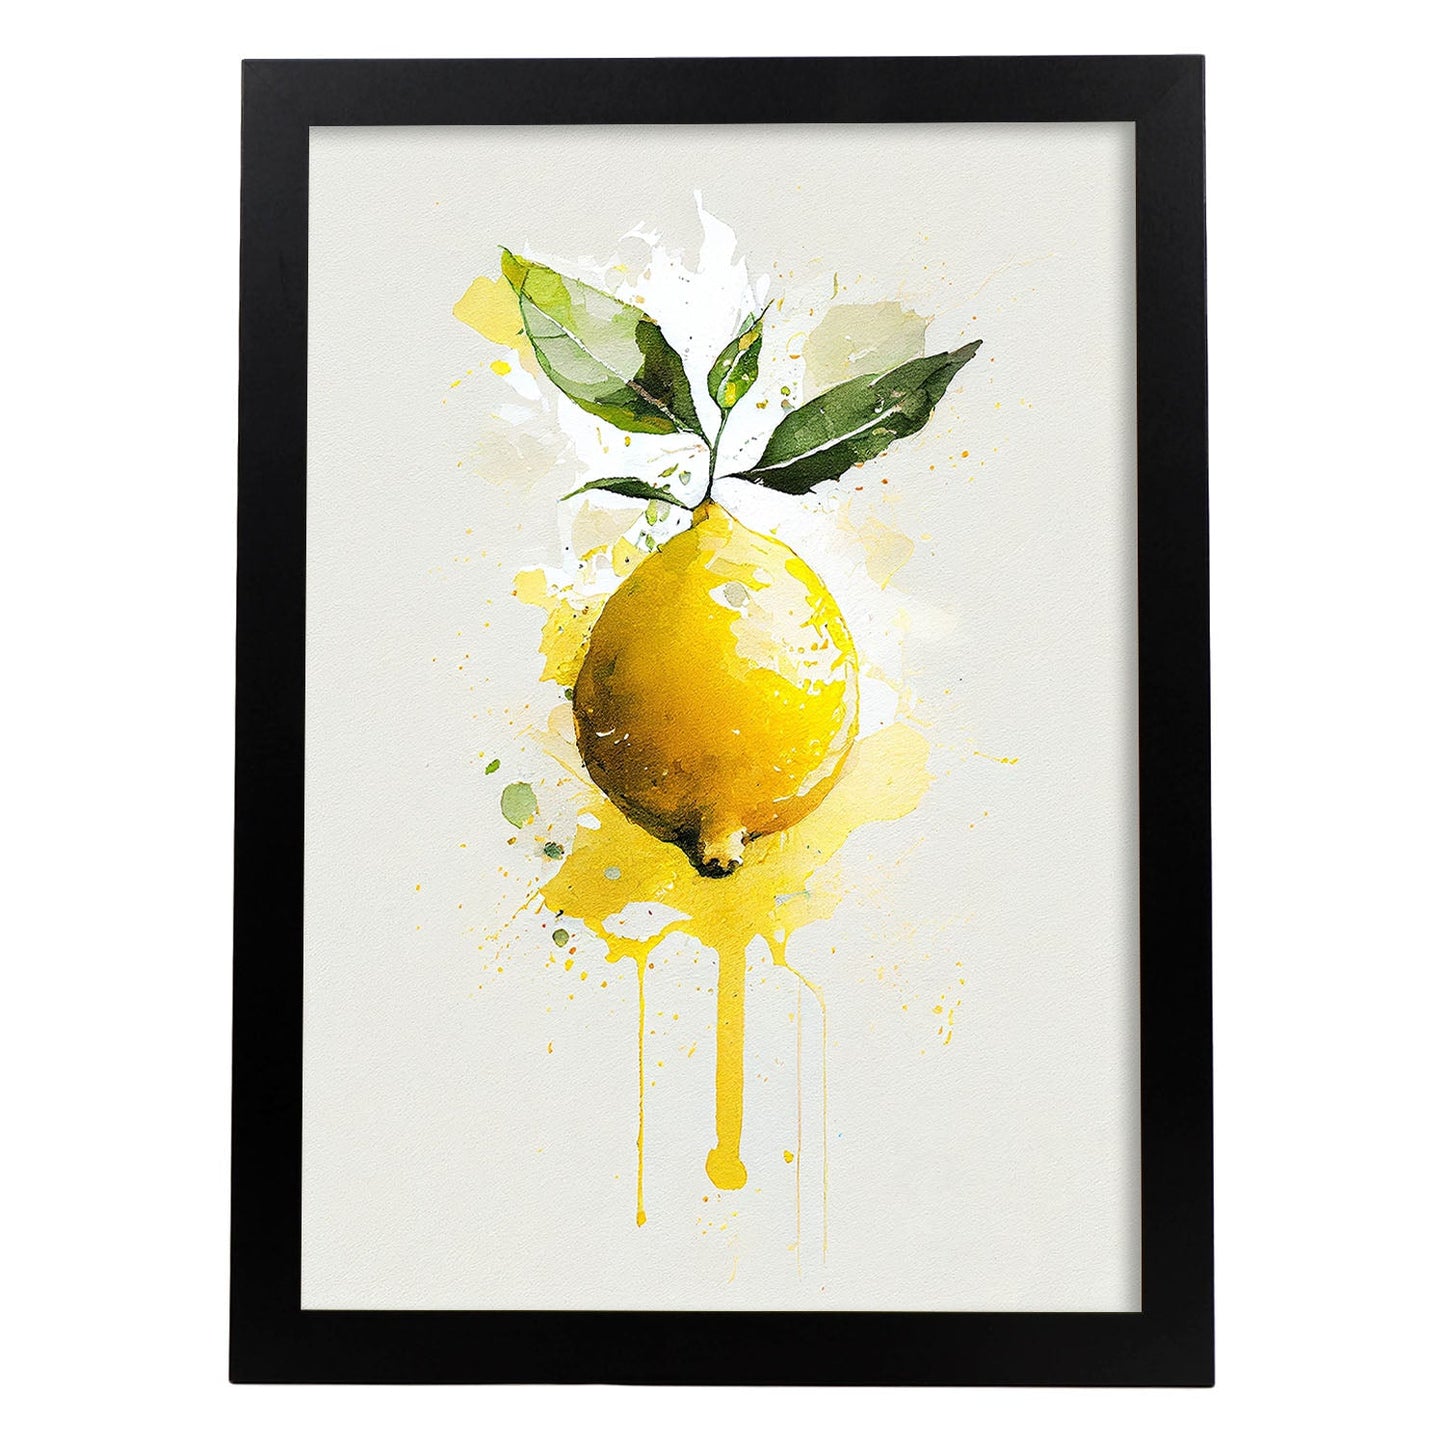 Nacnic minimalist Lemon. Aesthetic Wall Art Prints for Bedroom or Living Room Design.